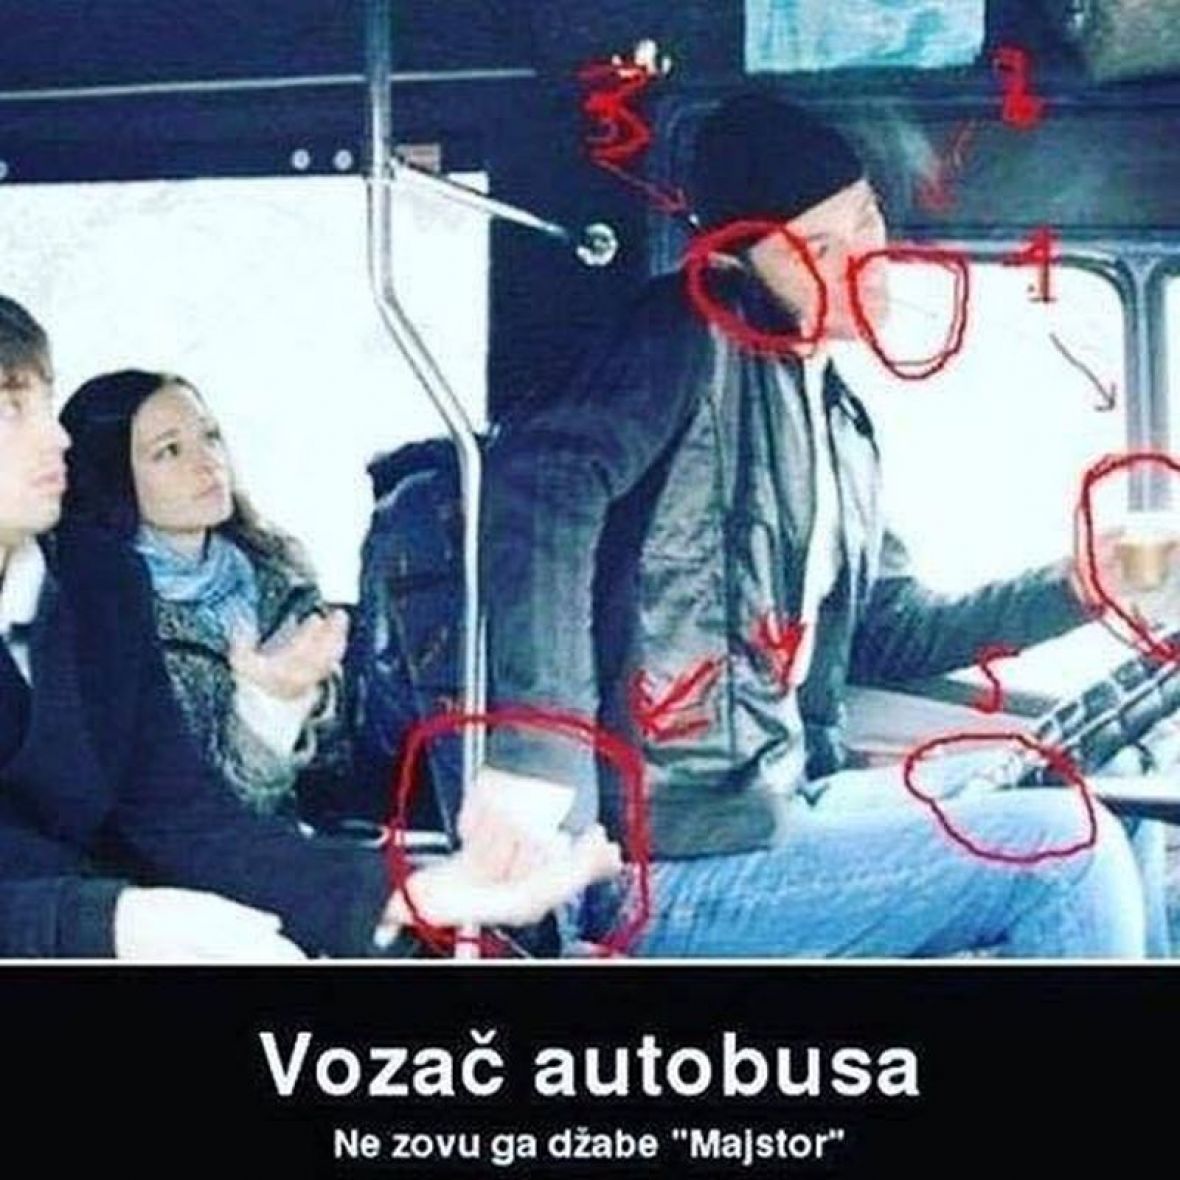 majstor_autobus_vozac_facebook.jpg - undefined